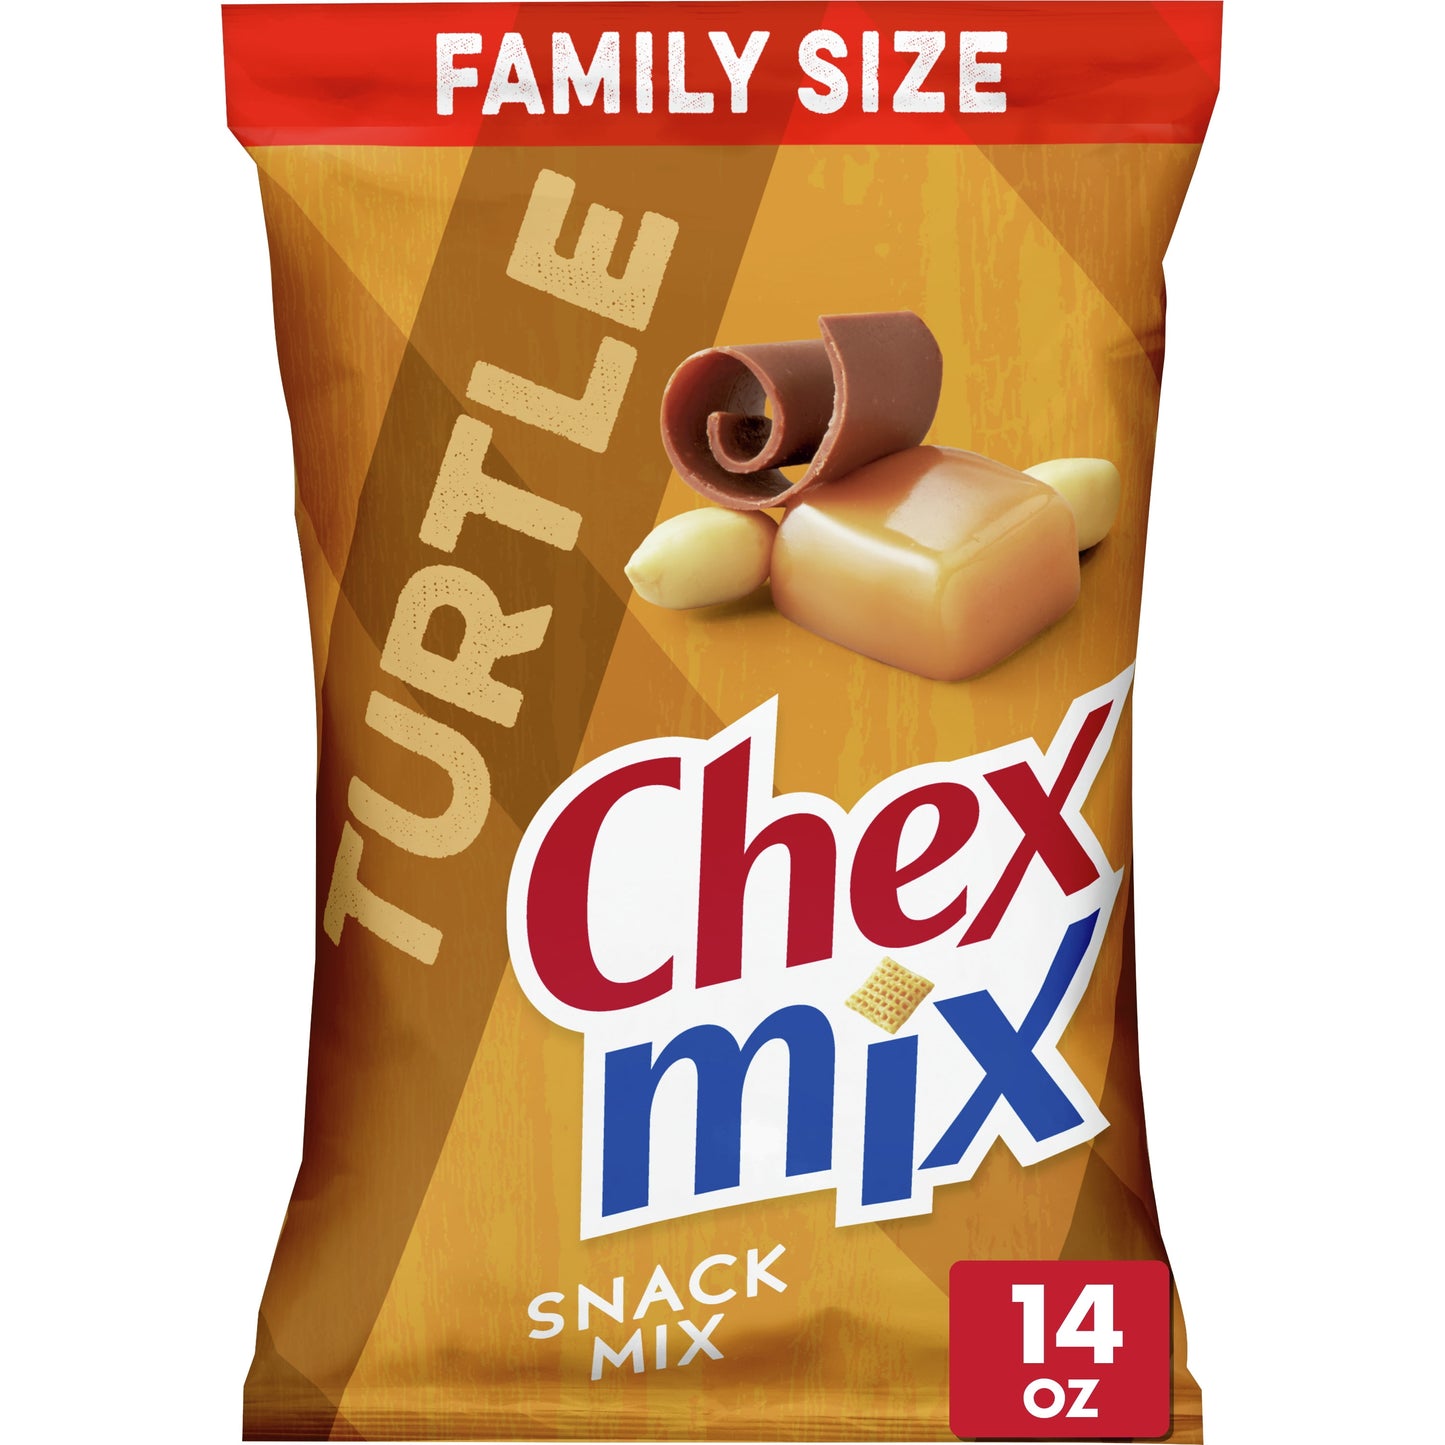 Snack Mix, Turtle, Indulgent Snack Bag, 14 Oz